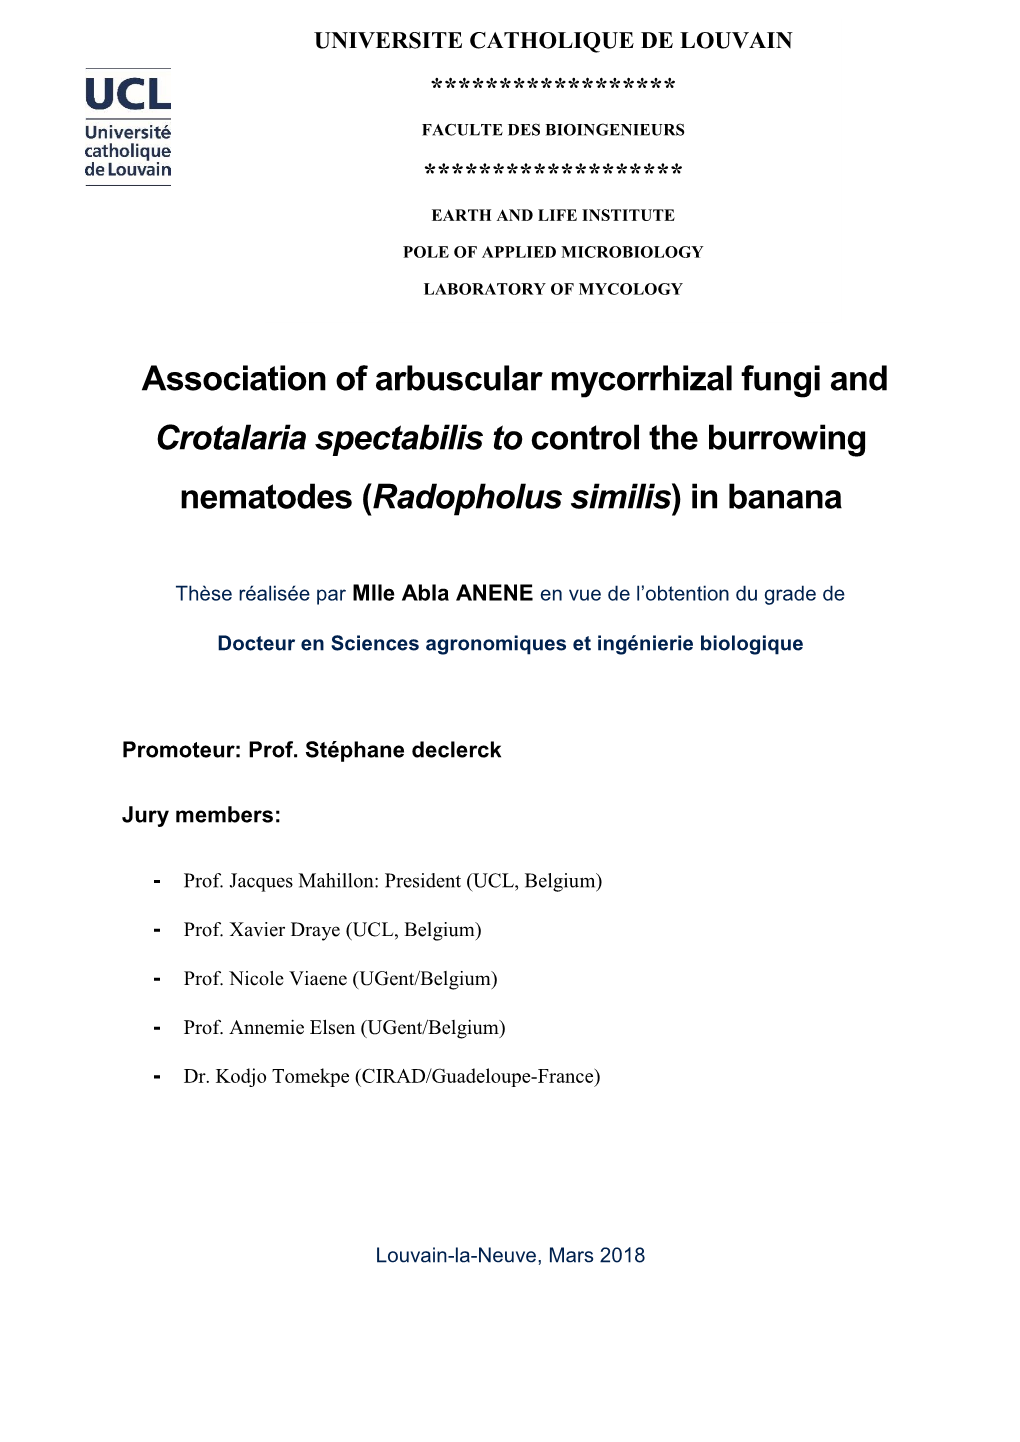 Association of Arbuscular Mycorrhizal Fungi and Crotalaria Spectabilis to Control the Burrowing Nematodes (Radopholus Similis) in Banana